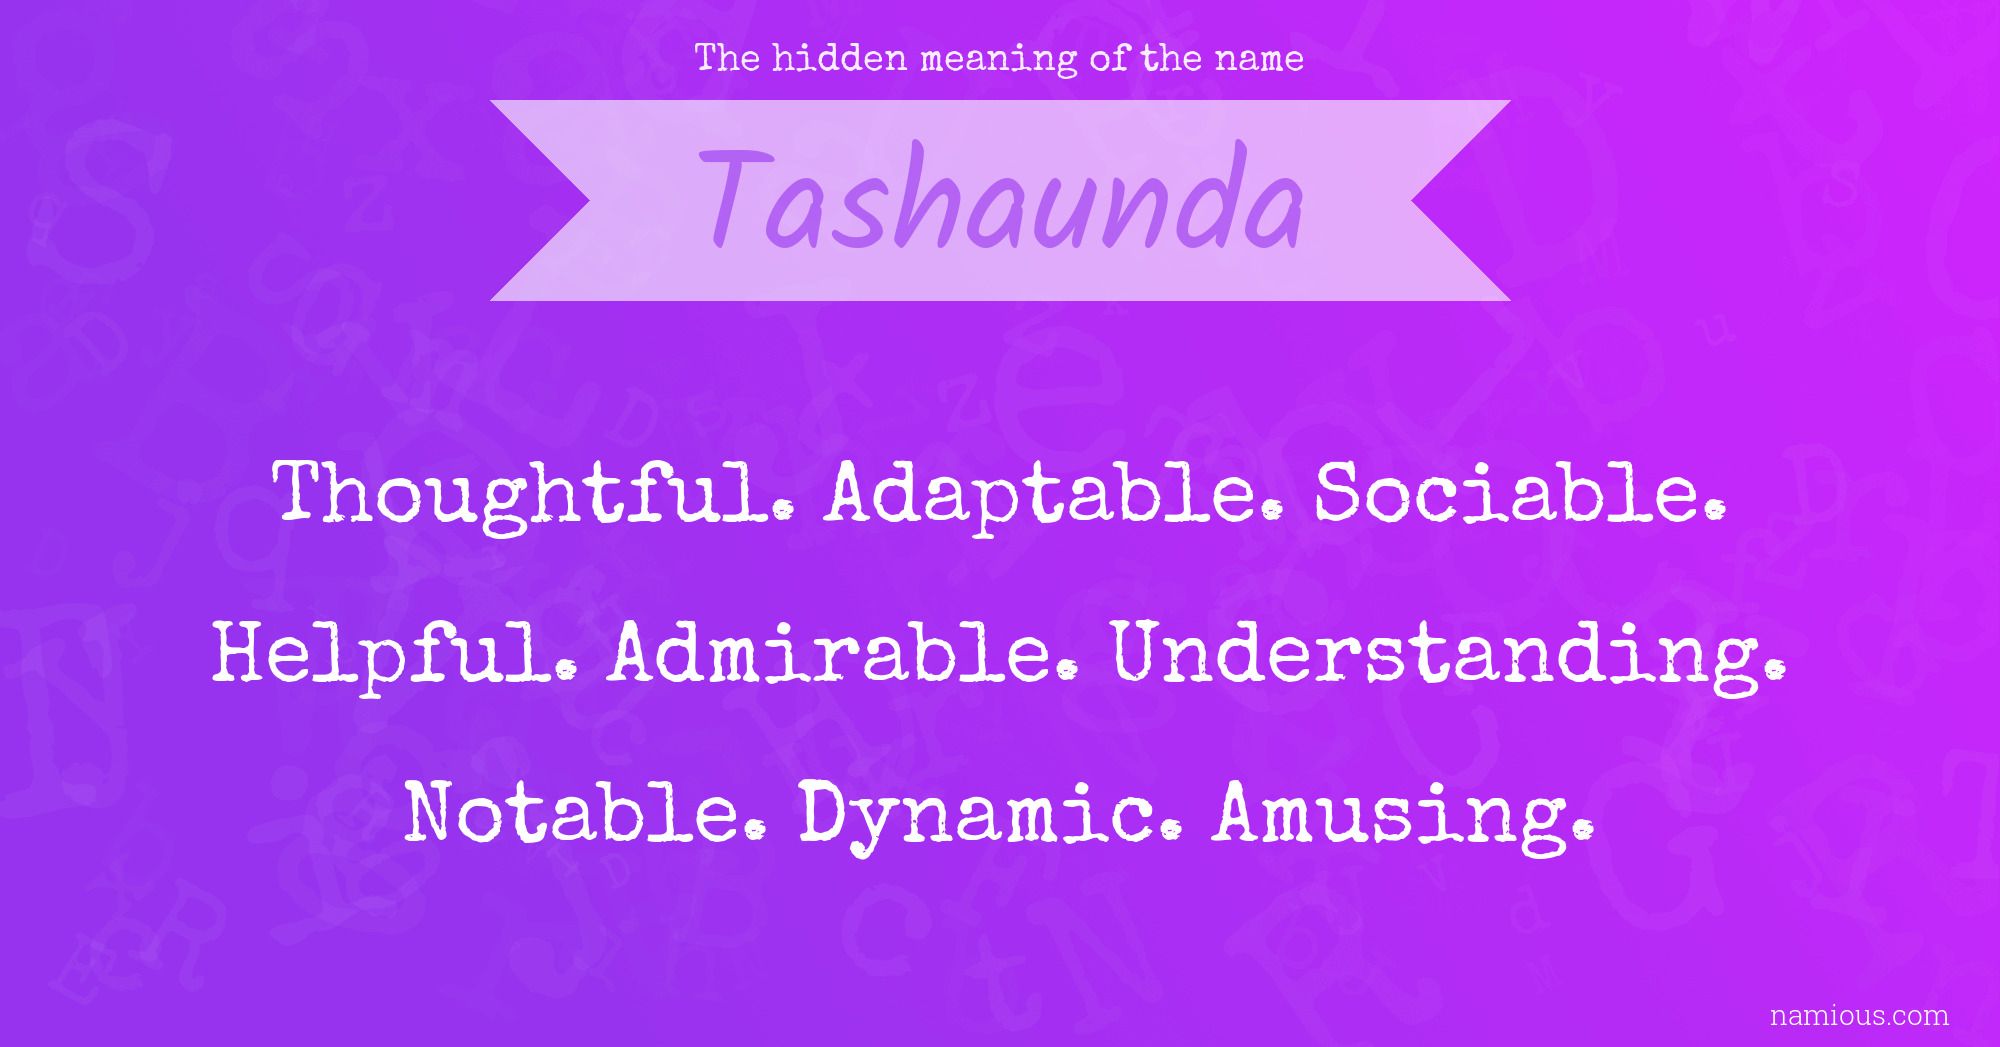 The hidden meaning of the name Tashaunda